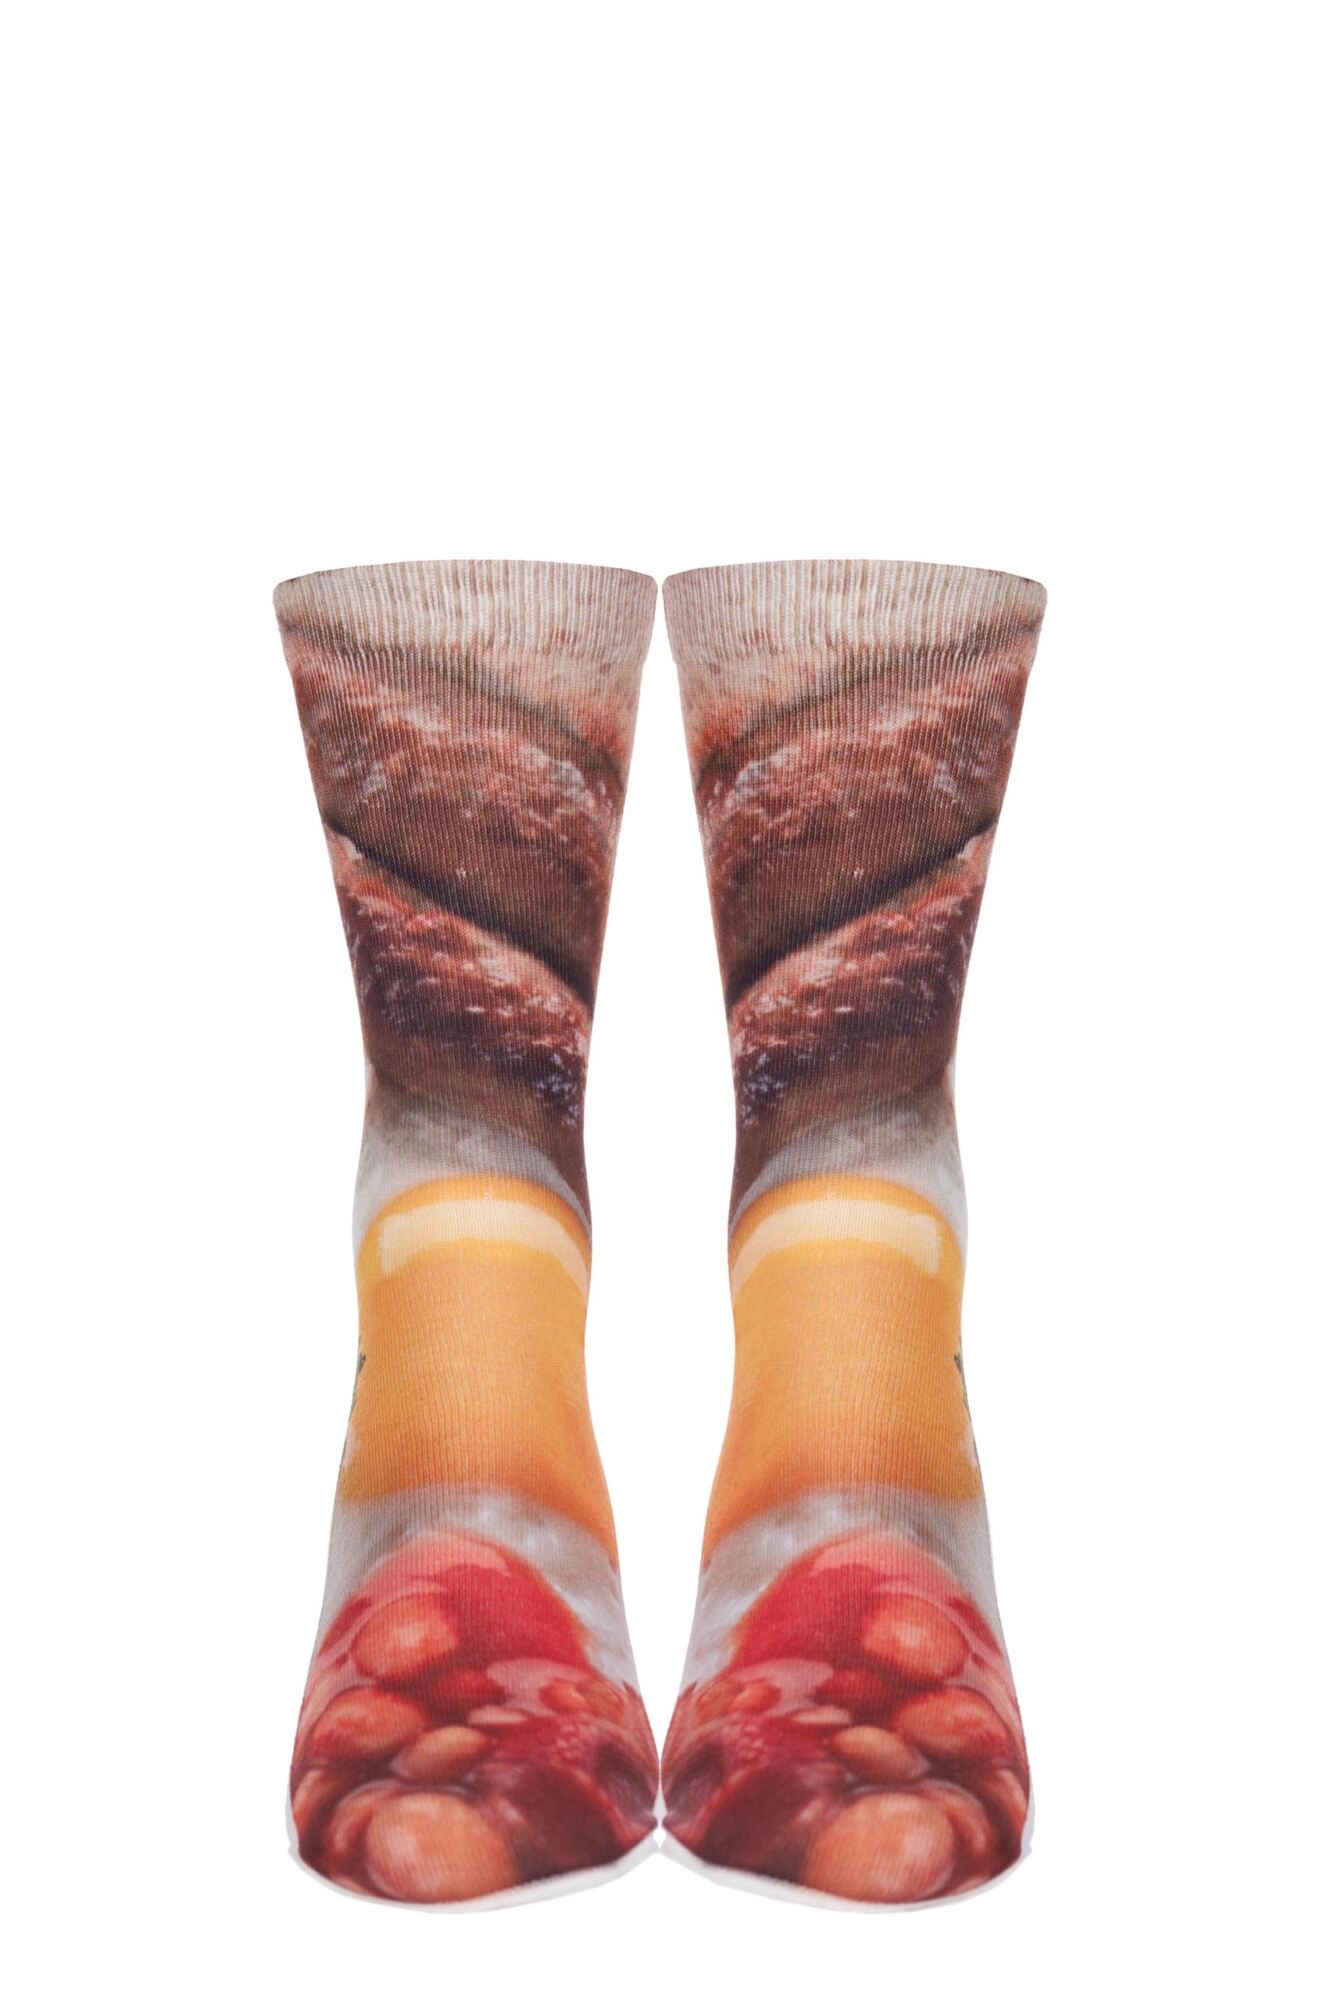 1 Pair Dare to Wear Pixel Perfect Full English Breakfast Printed Socks Men's - SOCKSHOP